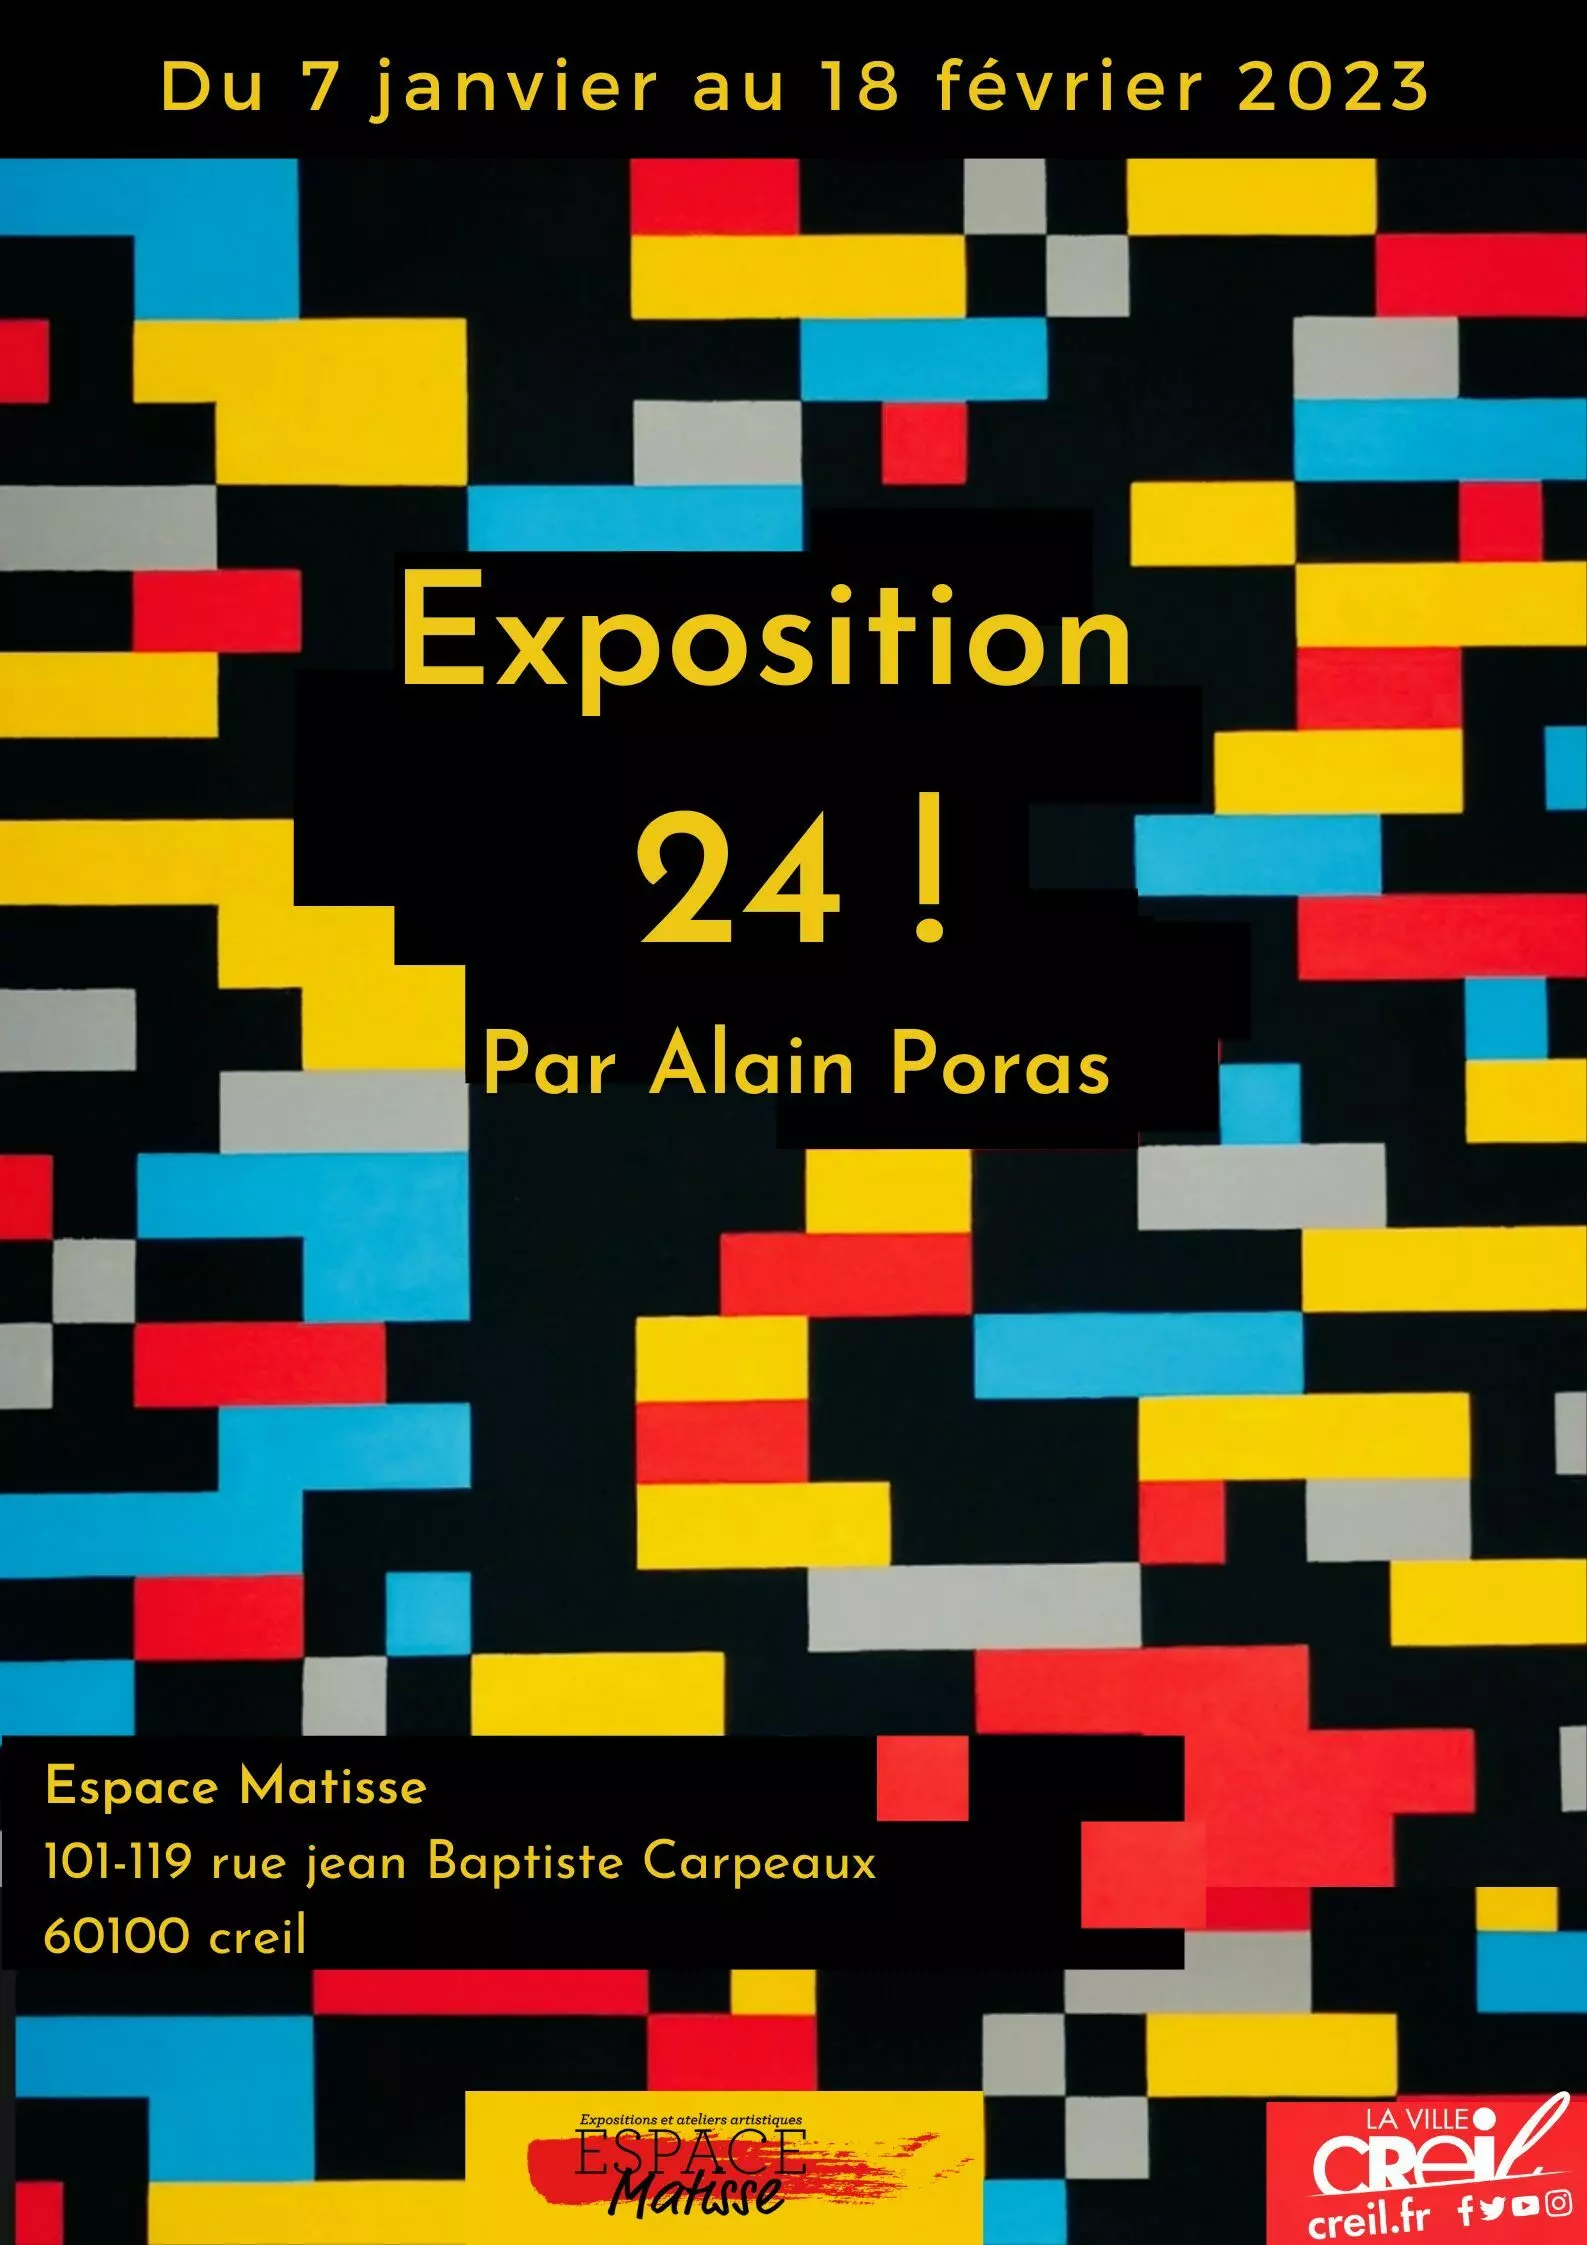 Expositions Cultures Arts-Espace Matisse